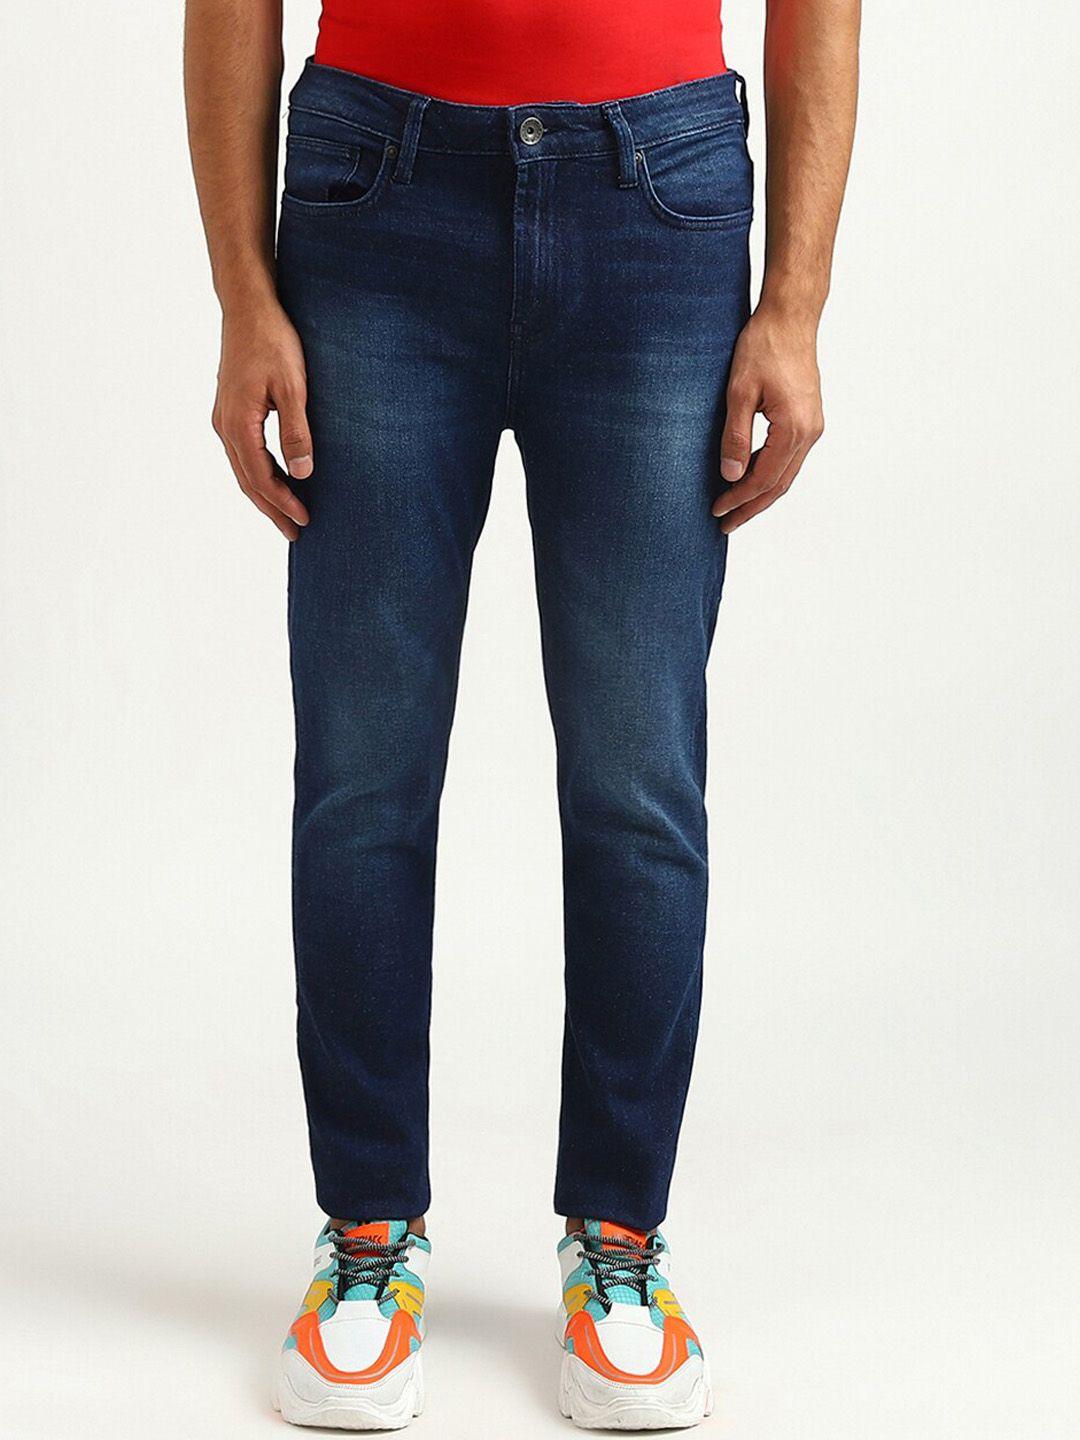 united-colors-of-benetton-men-navy-blue-light-fade-jeans